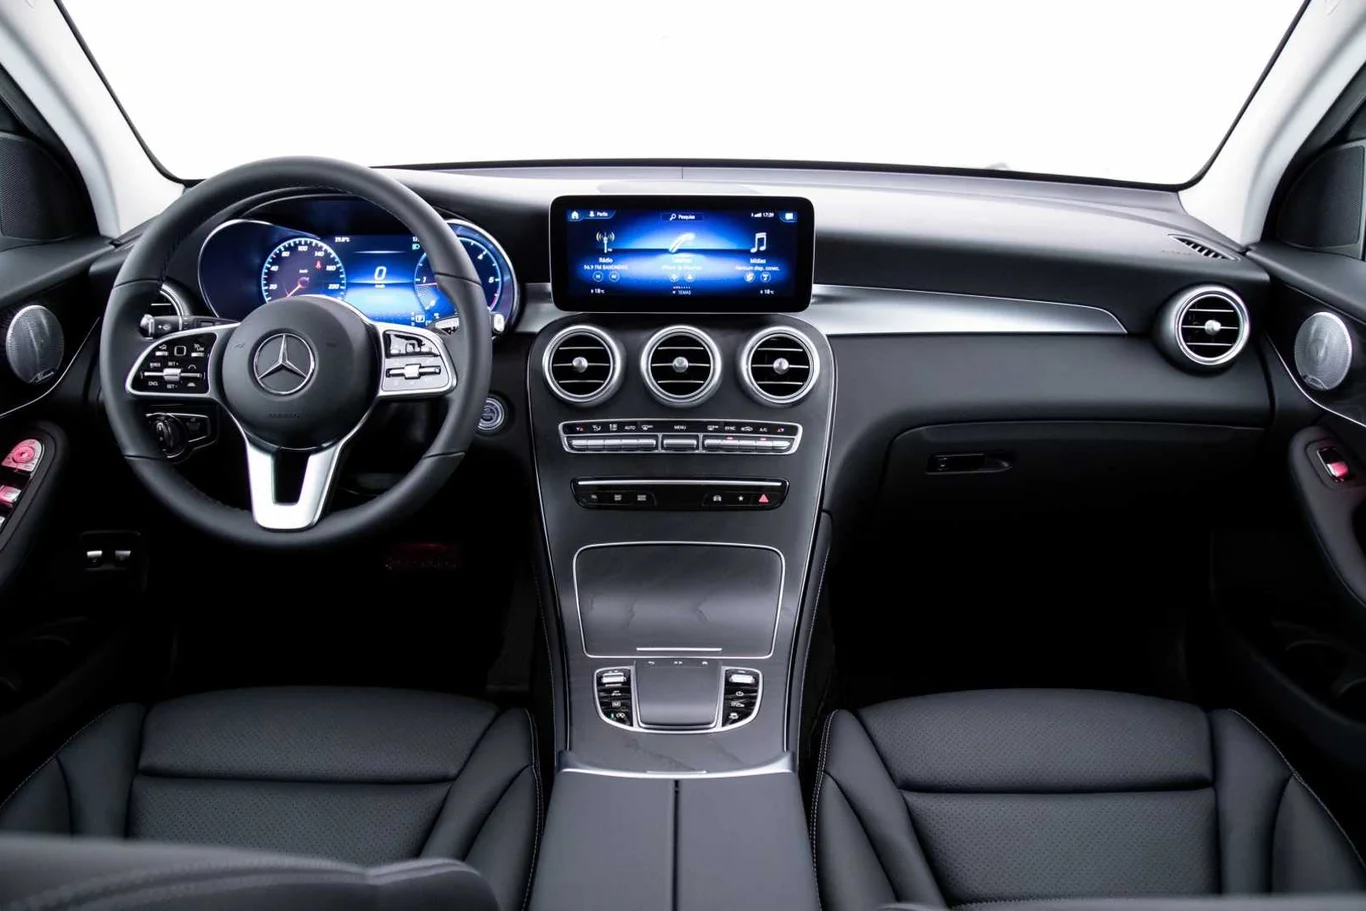 Mercedes-Benz GLC 220d Enduro 2.0 Turbodiesel 4MATIC (Aut)